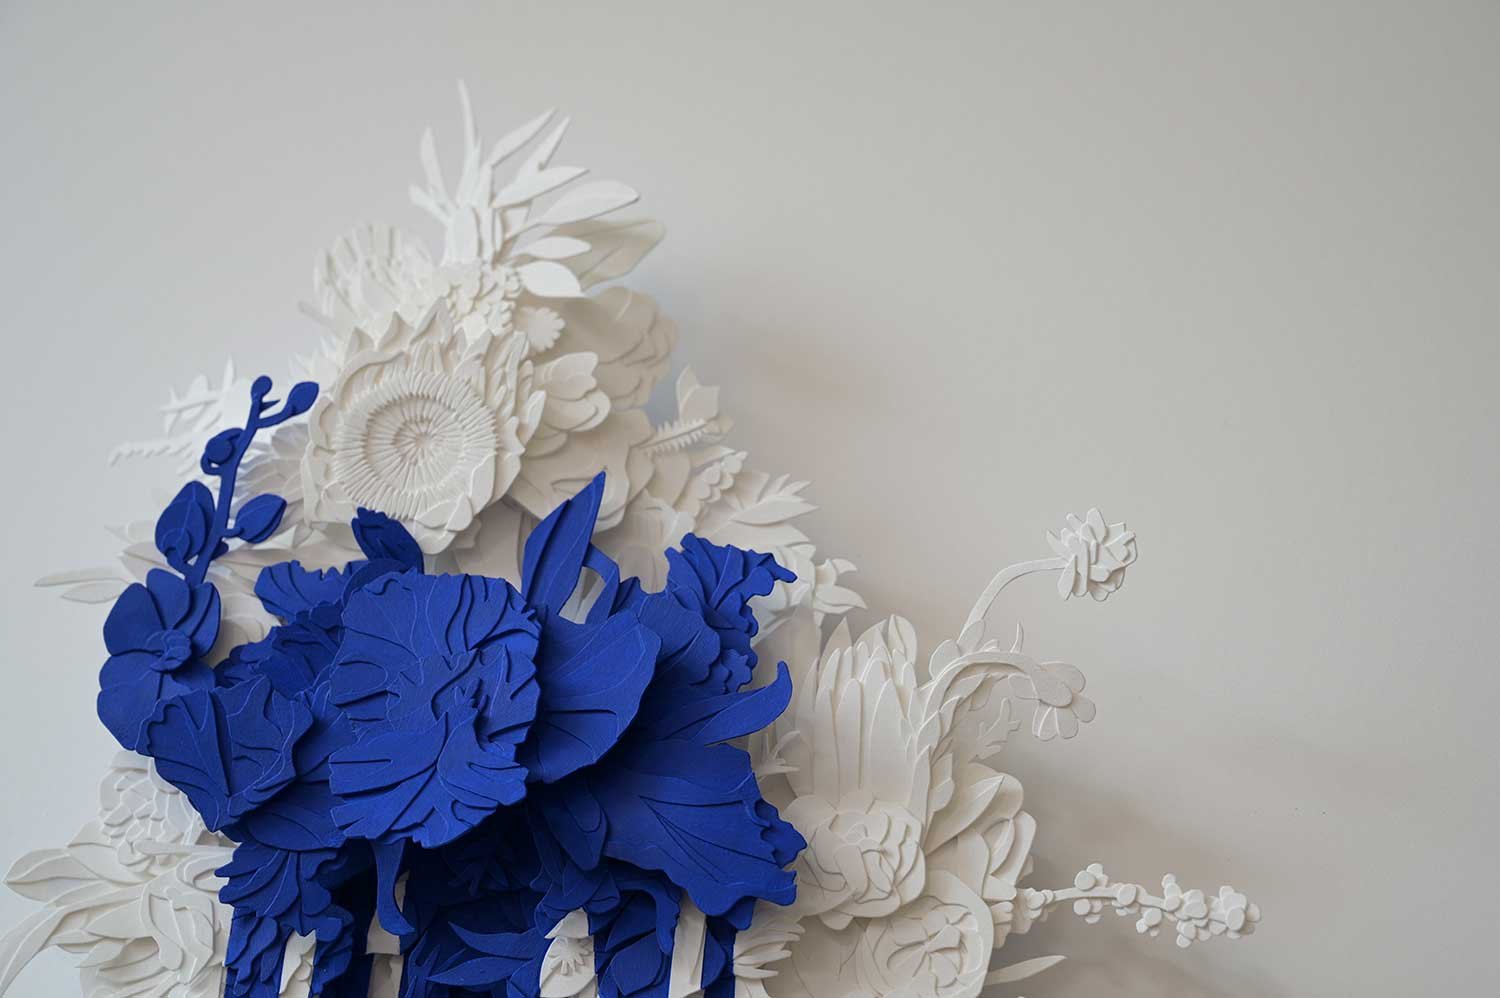 joey-bates-paper-art-sculpture-commission-3-detail.jpg